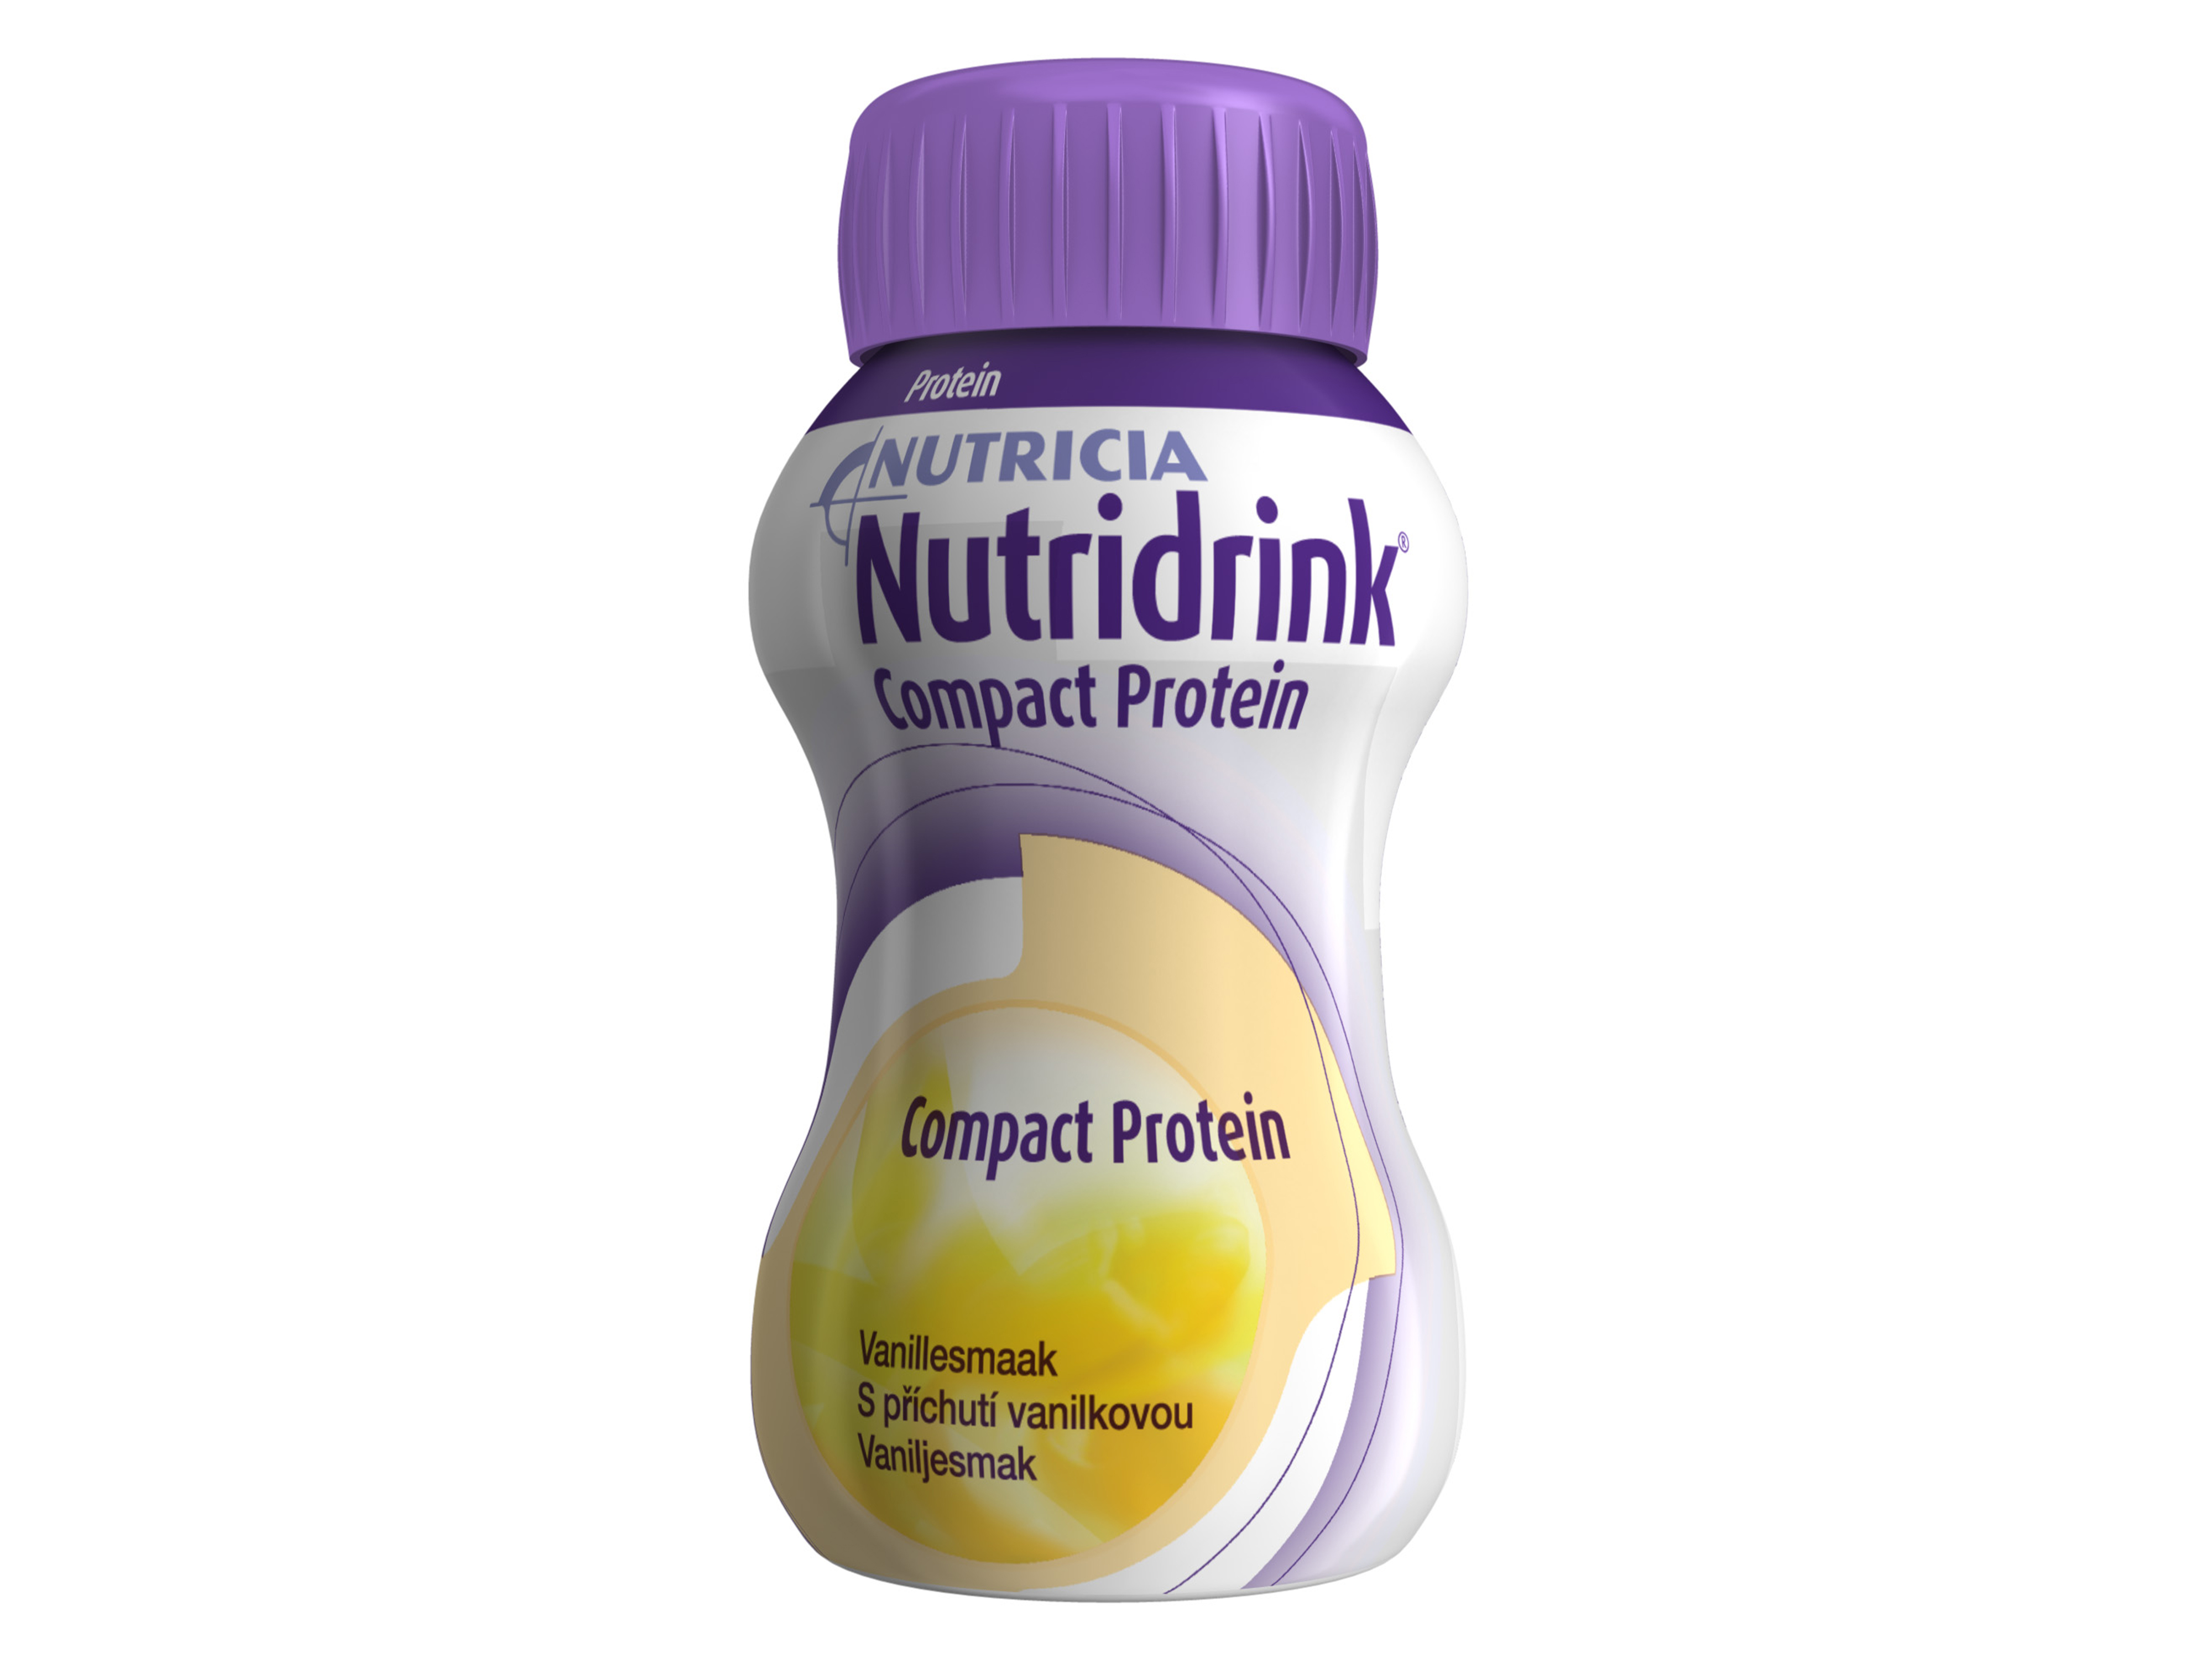 Nutridrink Compact proteinrik næringsdrikk, Vanilje, 4 x 125 ml